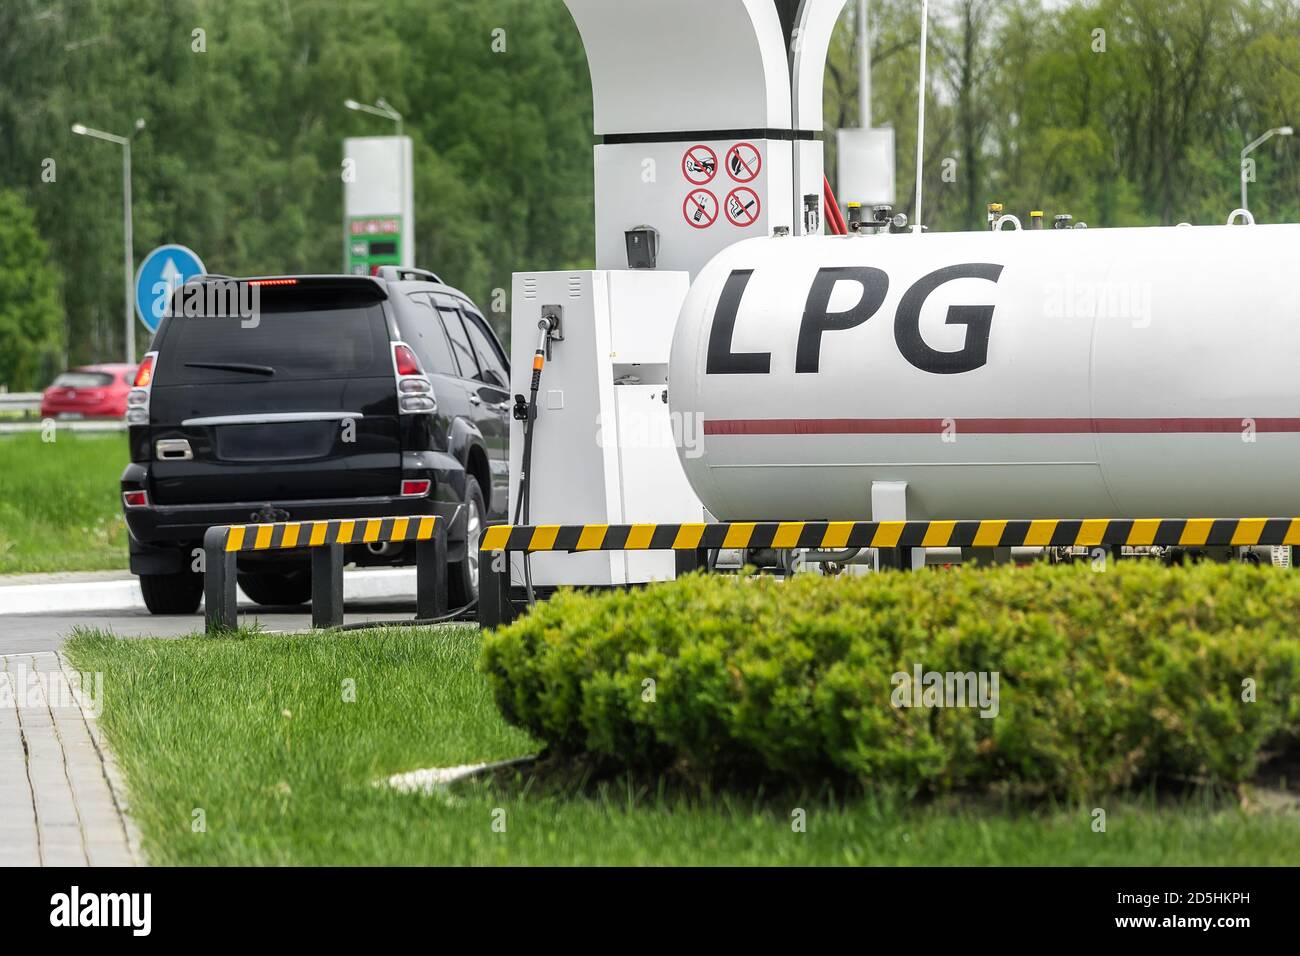 Liquid propane gas station. Black modern SUV car refueling tank